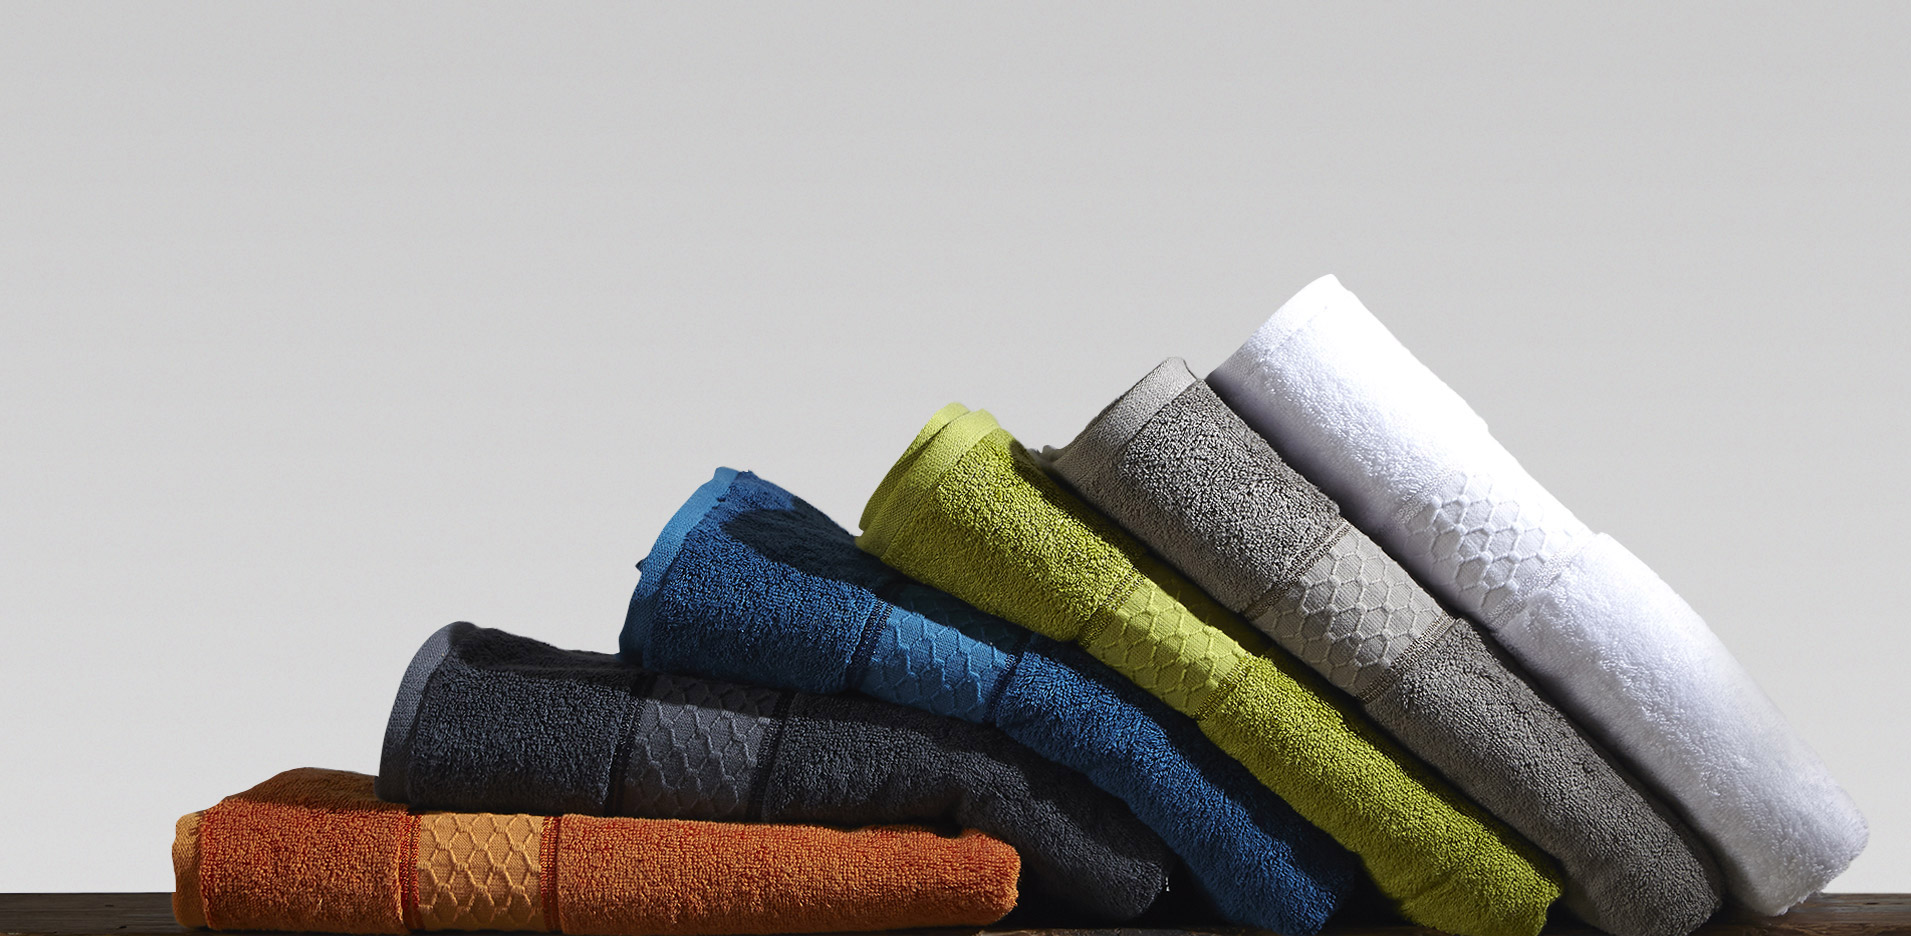 Loftex intros towels made using a waterless dye process